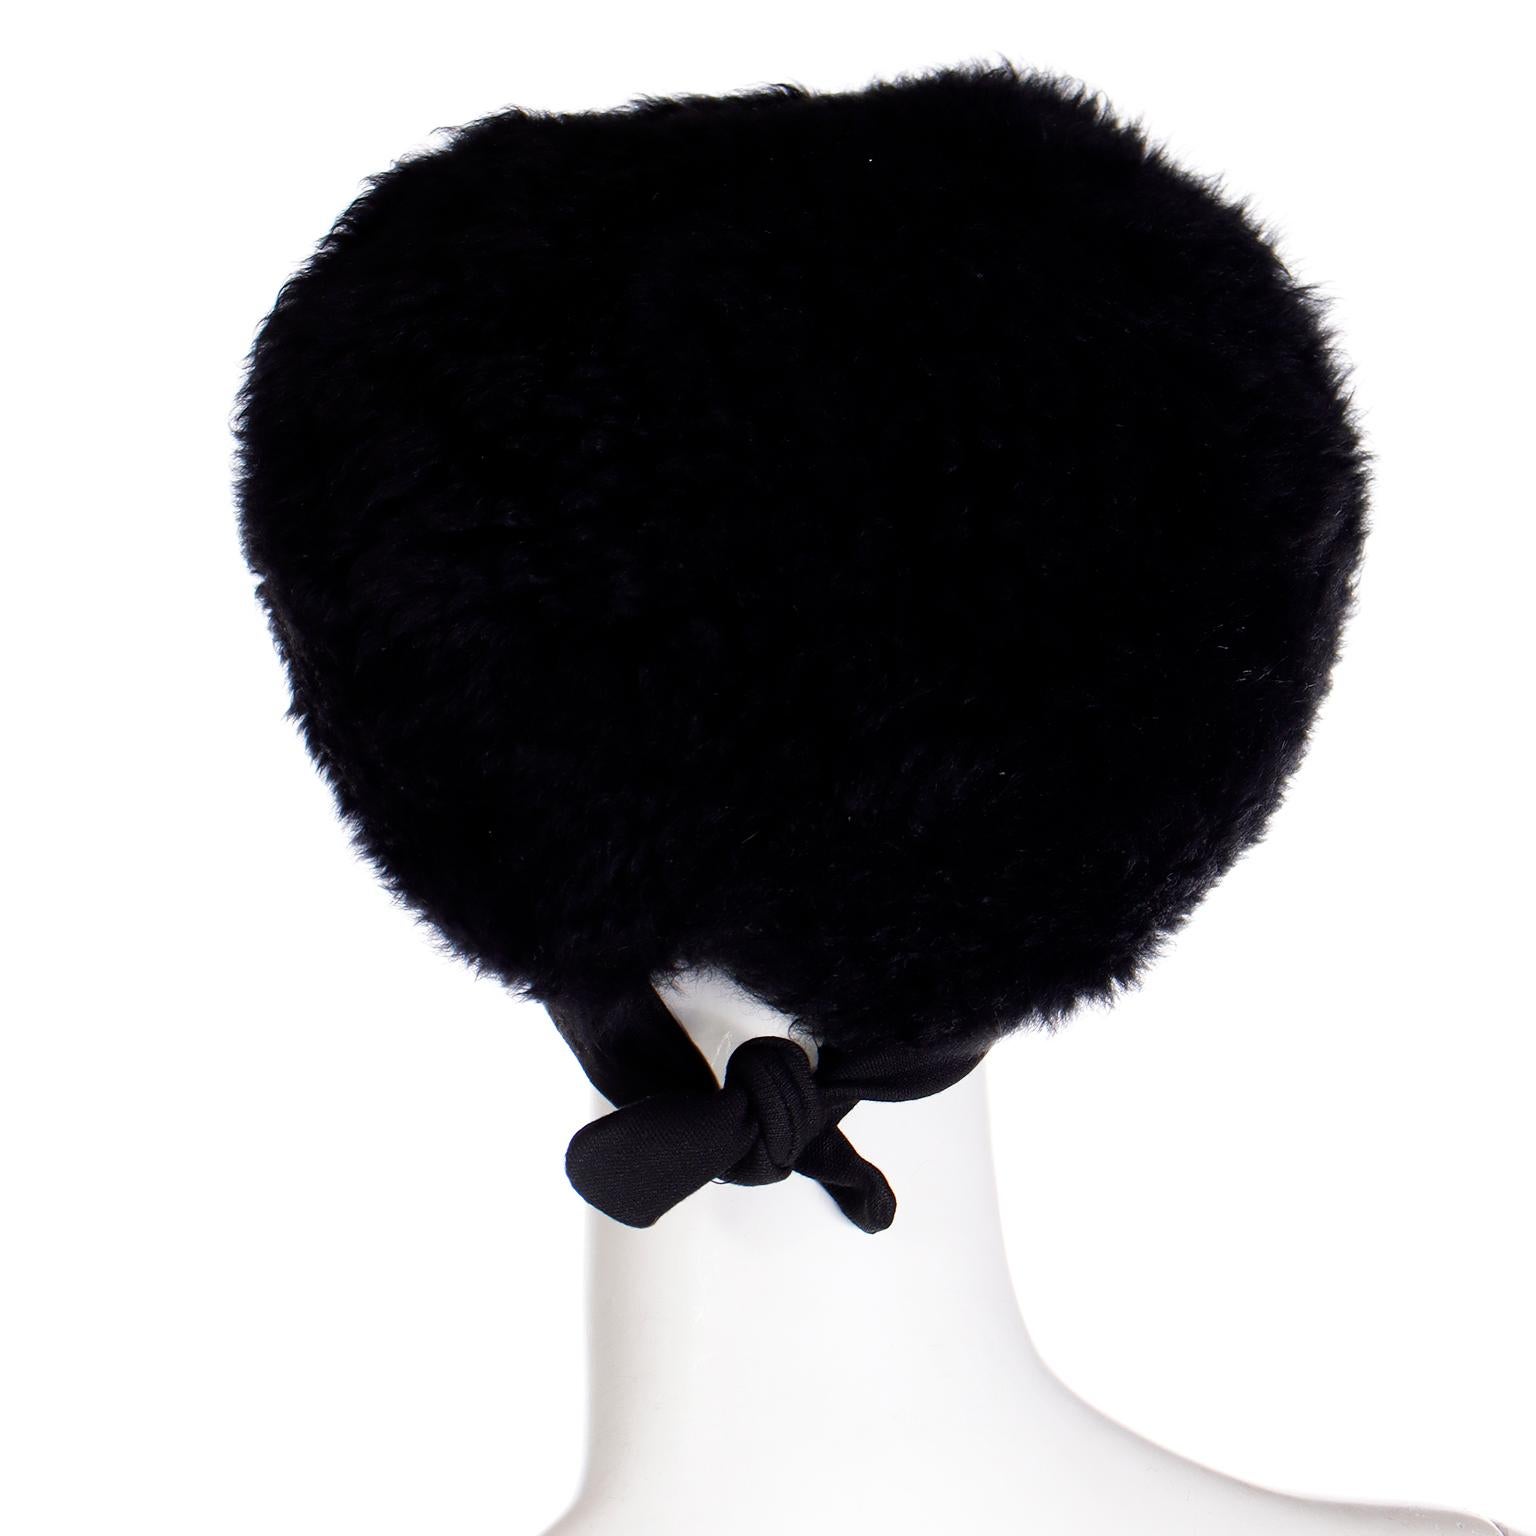 Women's Yves Saint Laurent 1970s Russian inspired Vintage Black Fur Hat For Sale